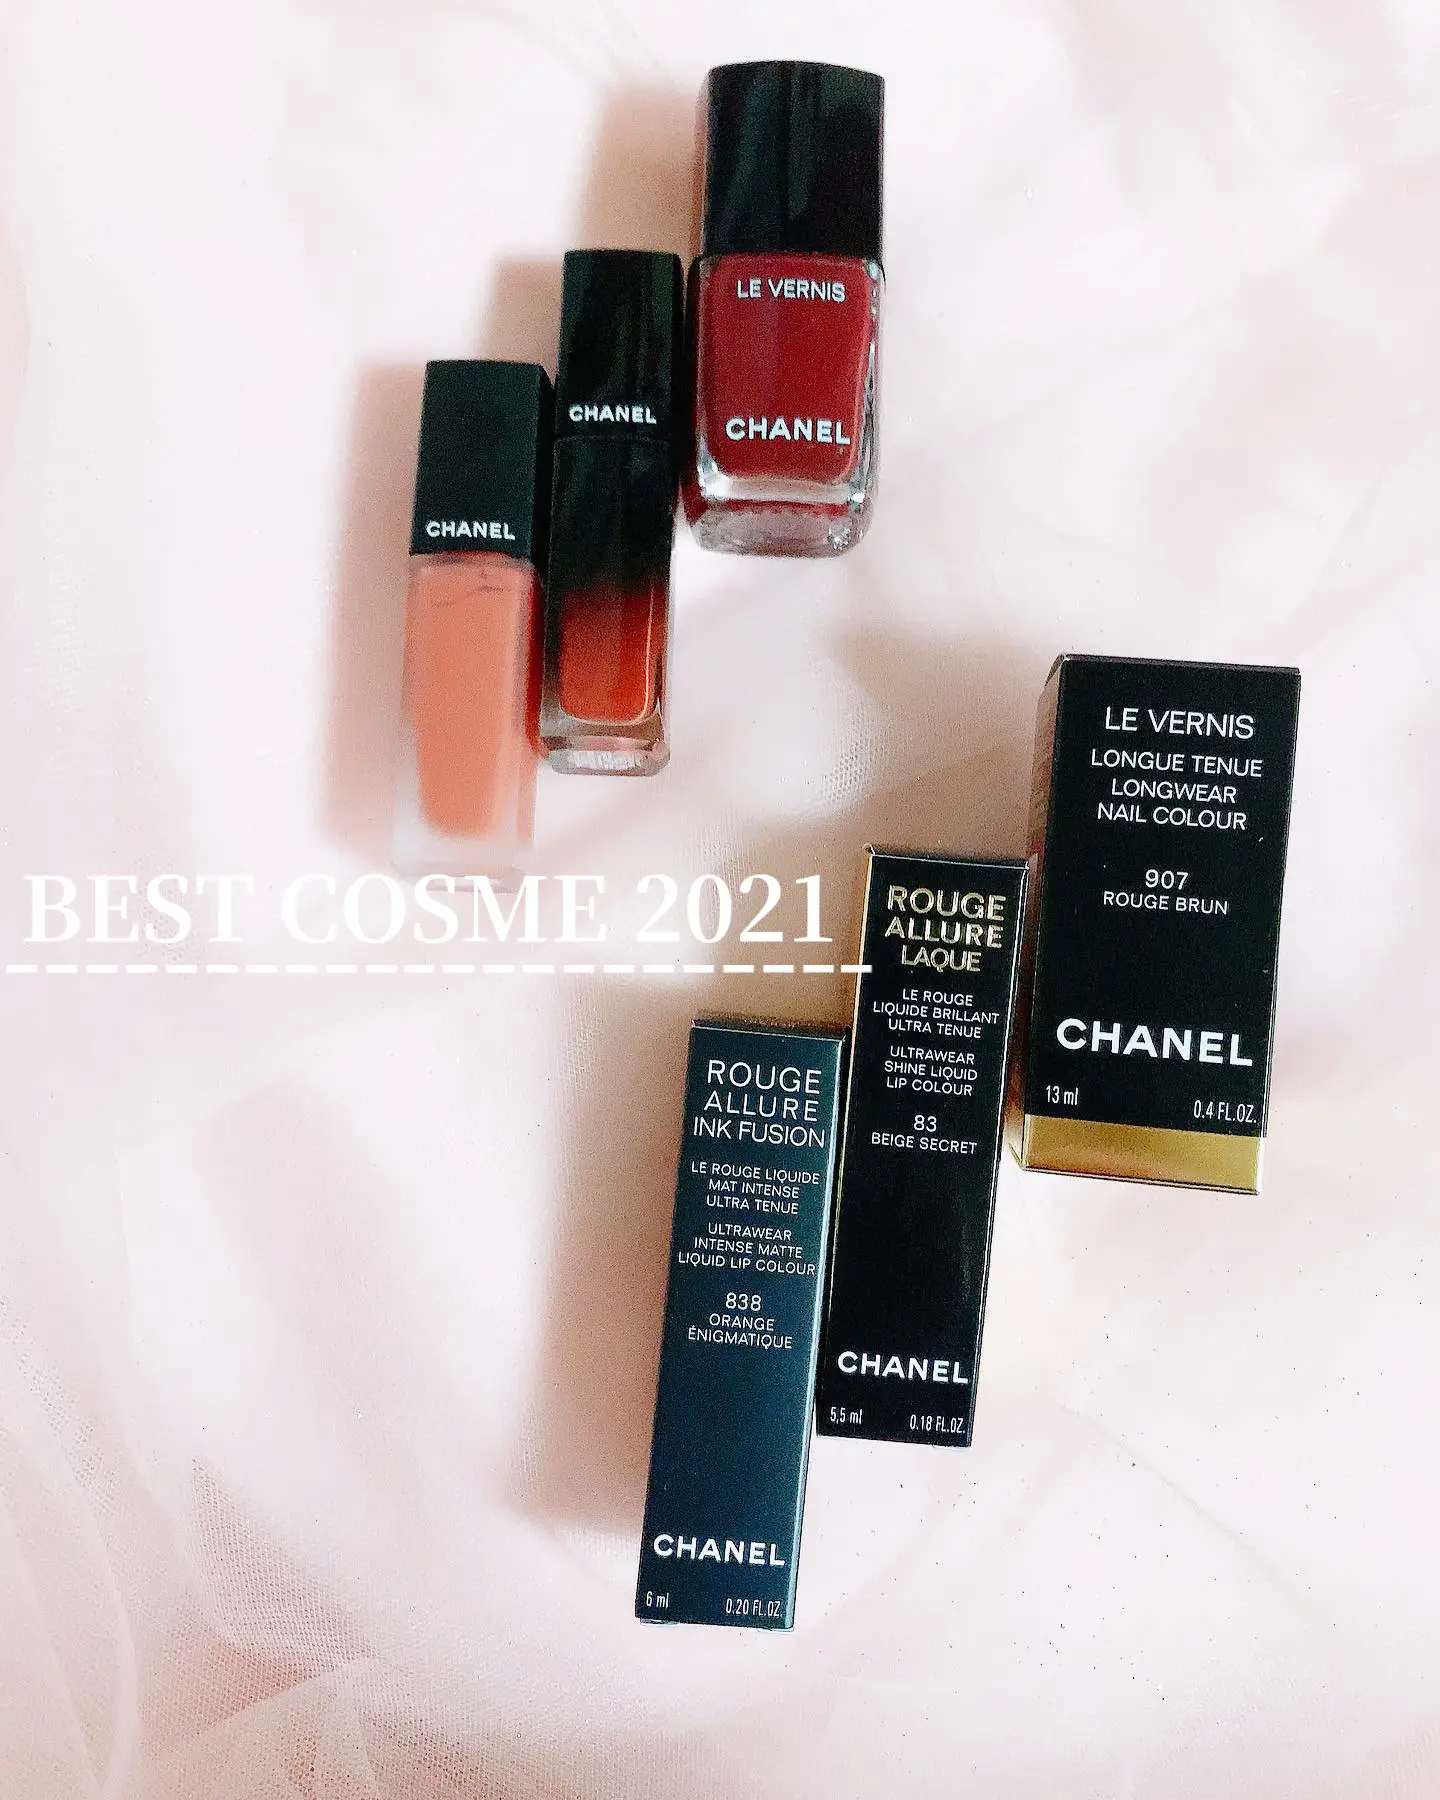 chanel 838 lipstick